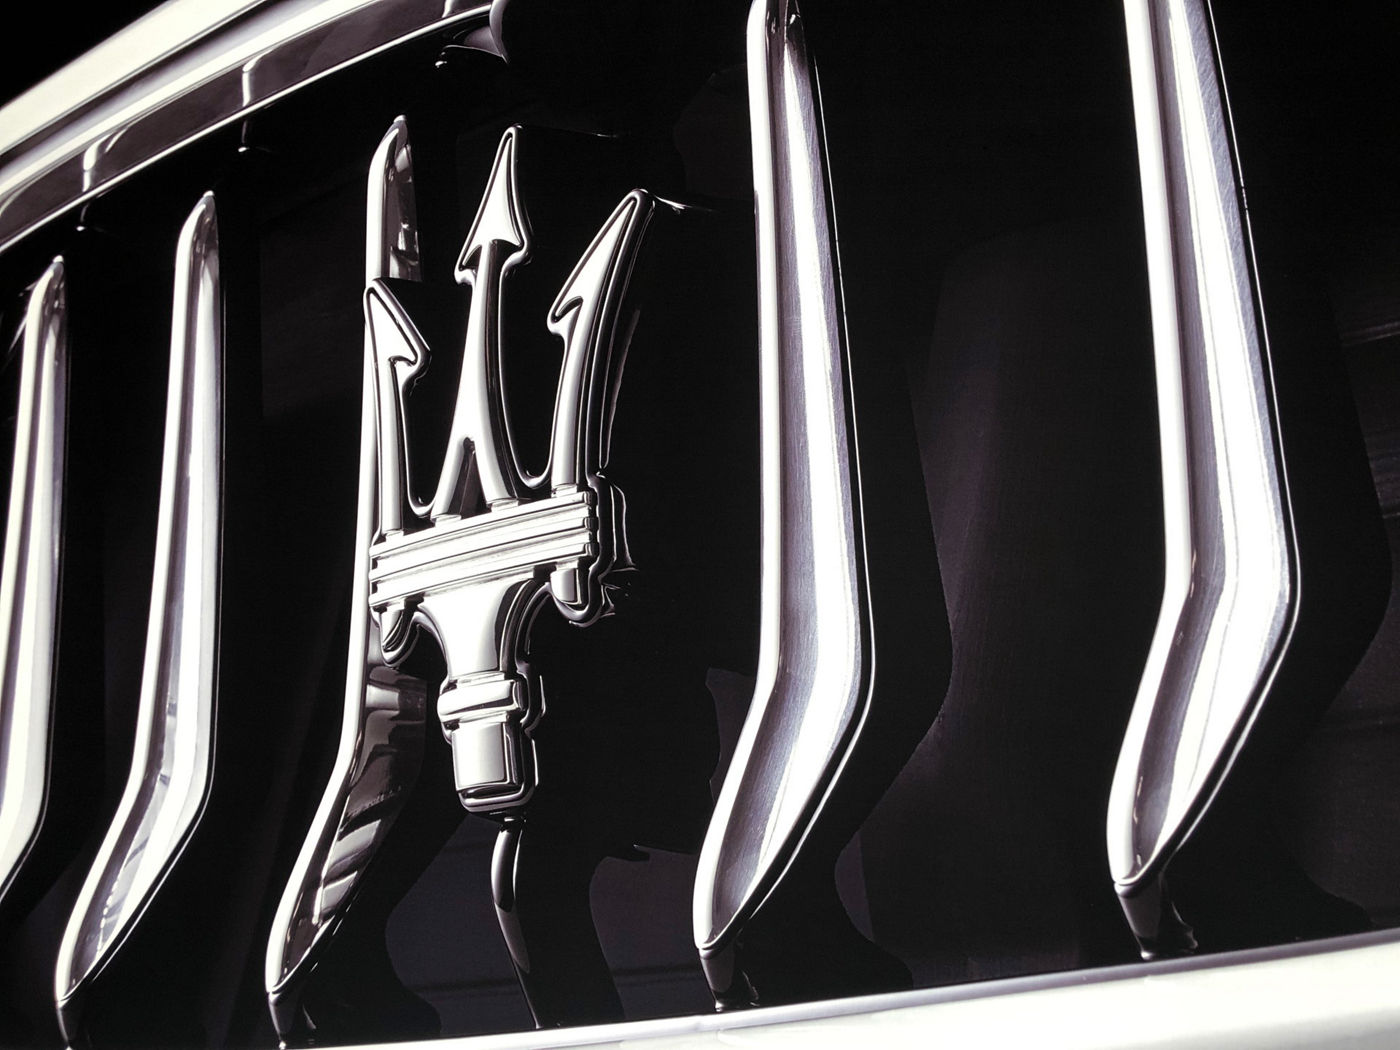 Bumper with Trident logo on Maserati model